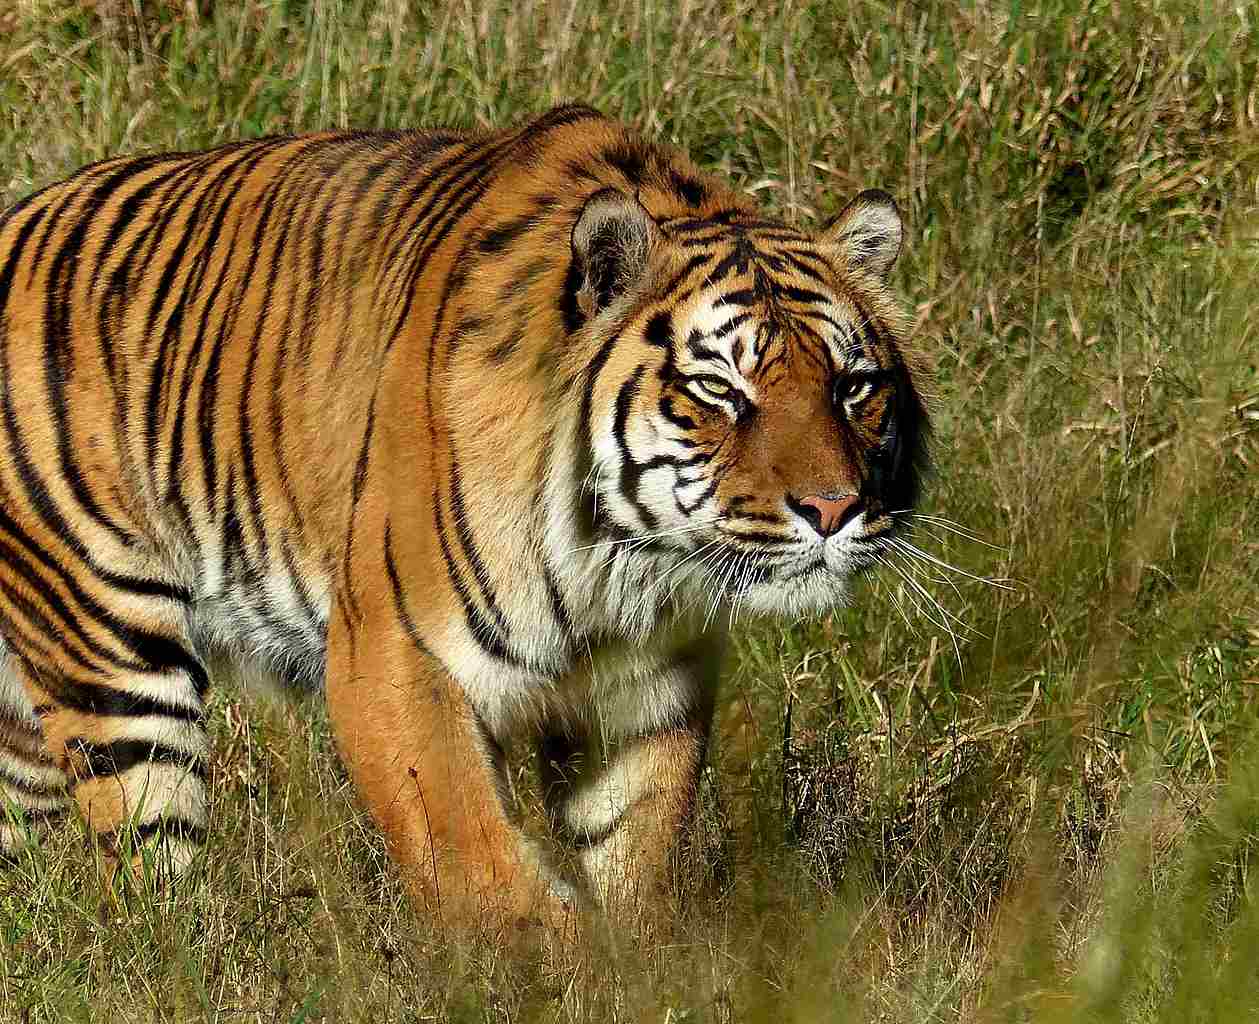 Cheetah Vs Tiger: Larger Size and Heavier Weight Make Tigers Superior to Cheetahs (Credit: Bernard Spragg. NZ 2014 .CC0 1.0.)